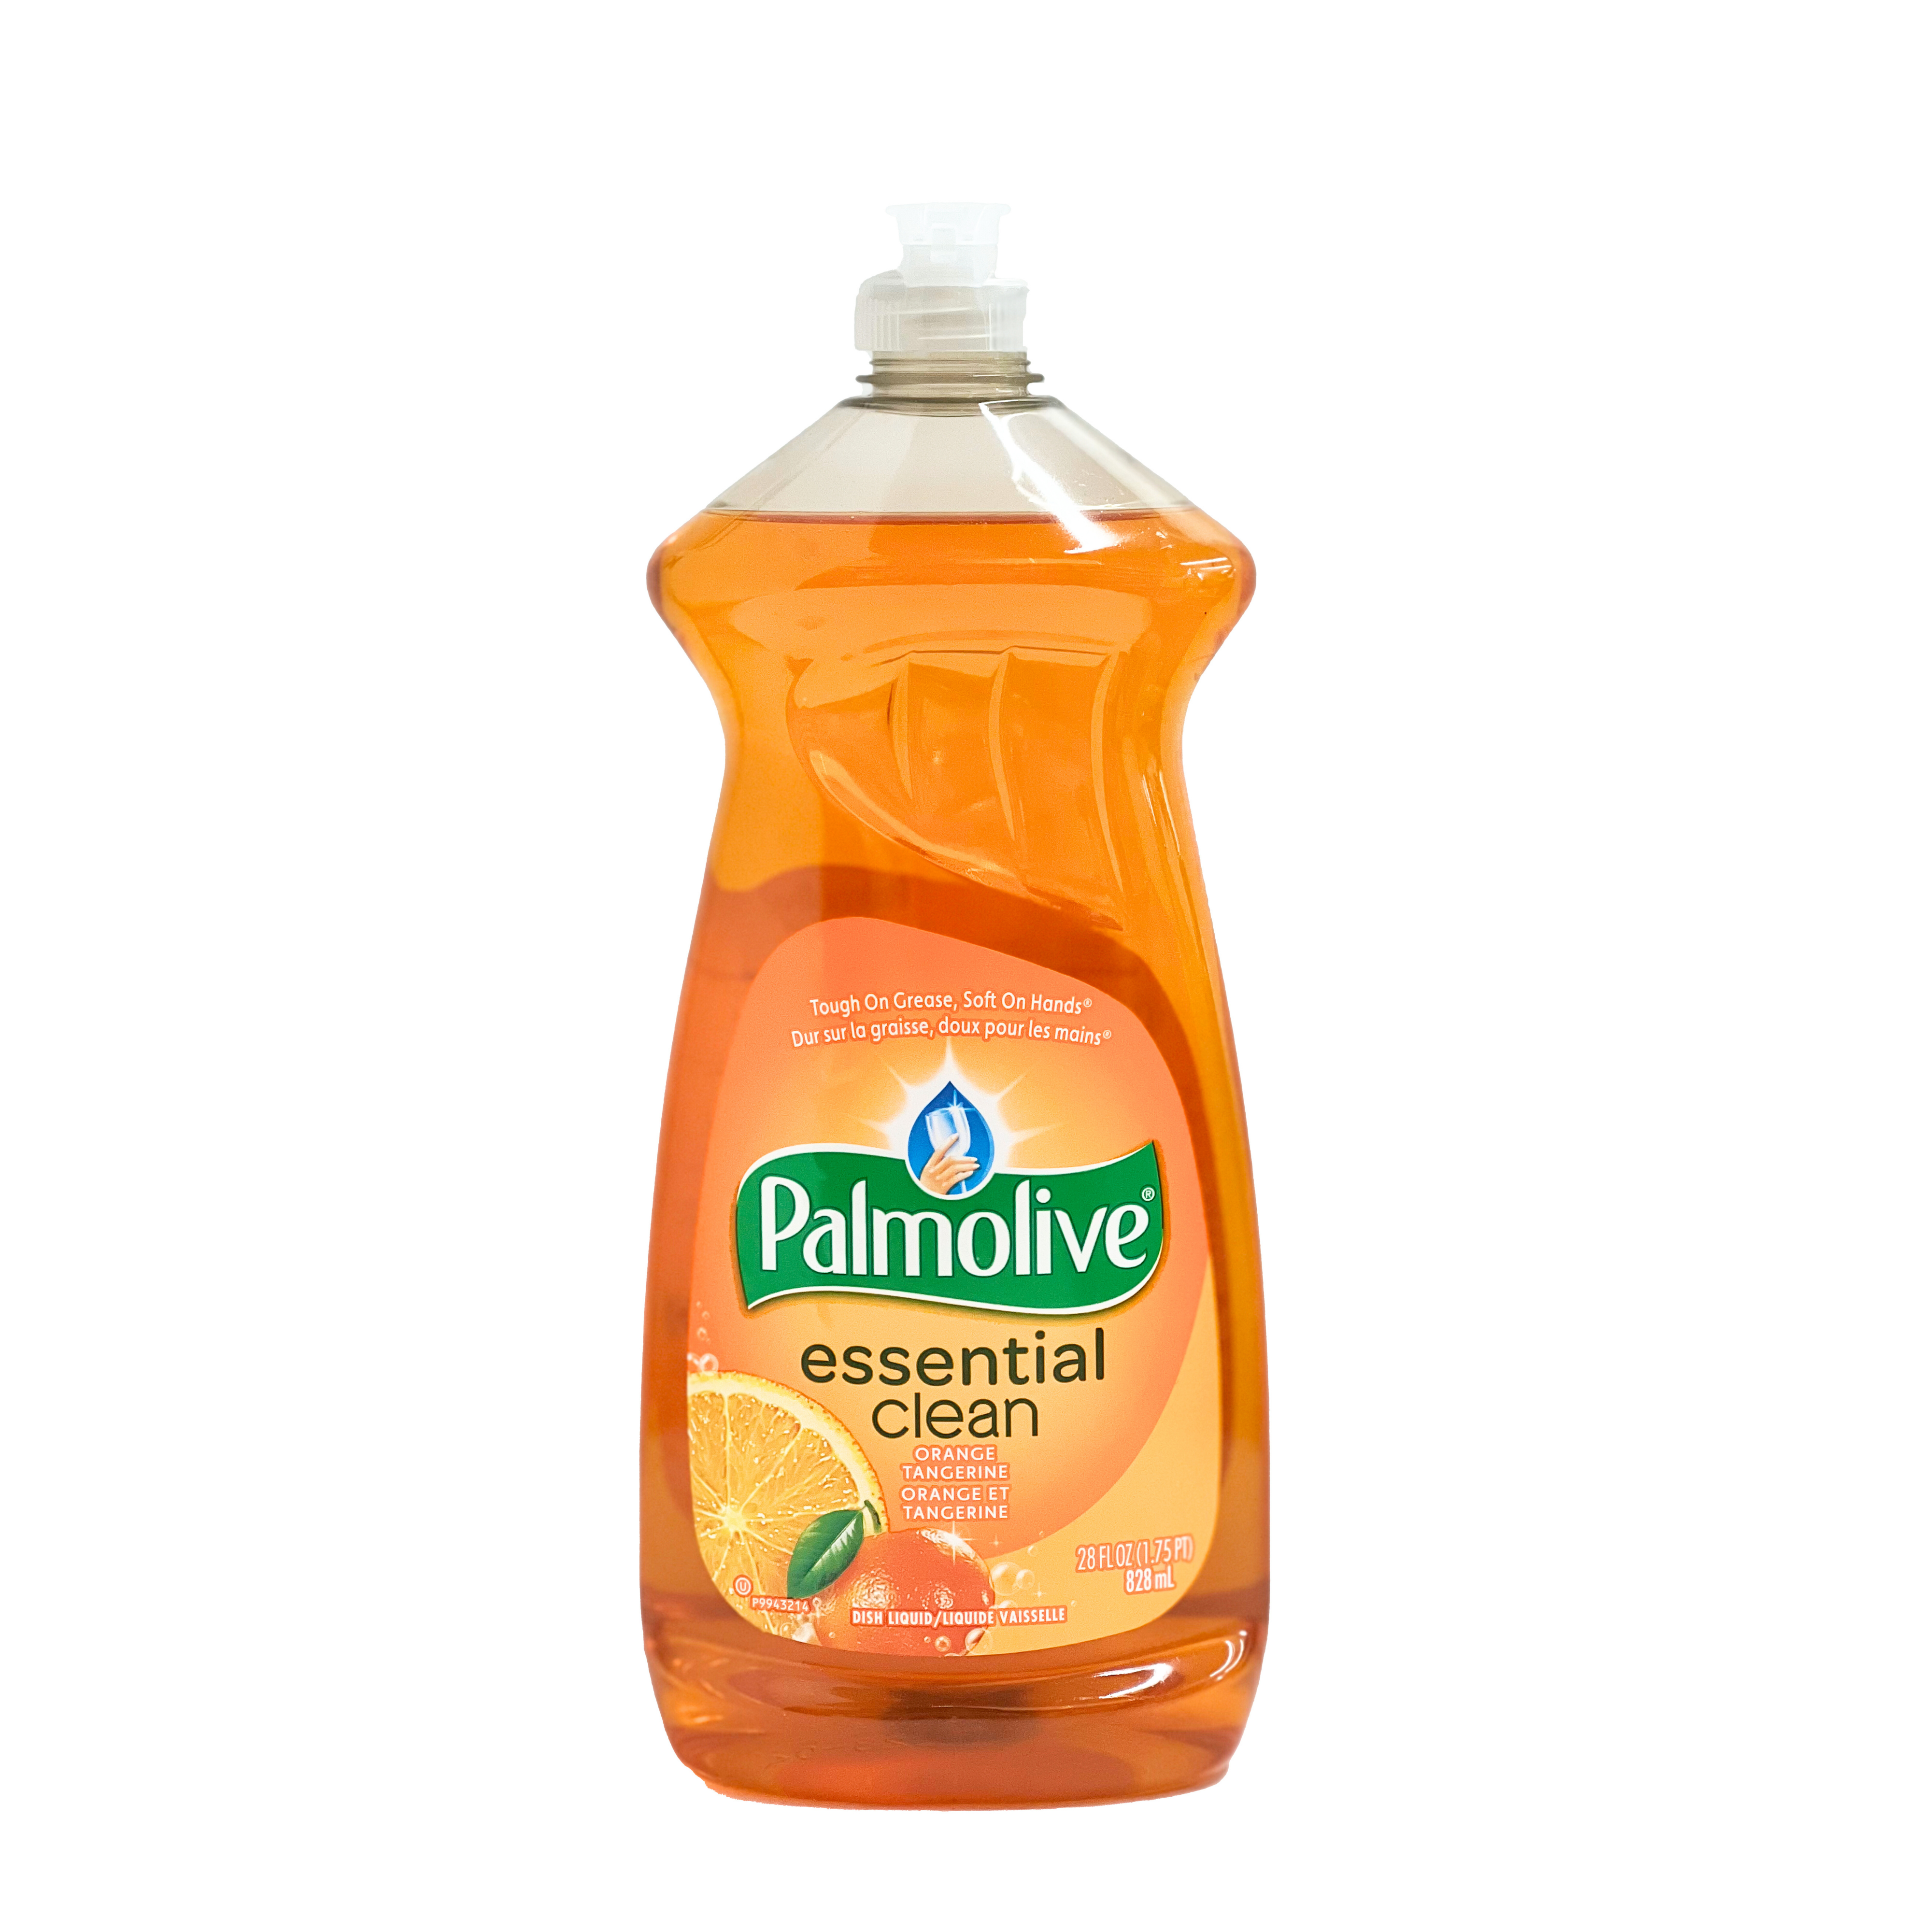 Palmolive Dish Soap Orange 828ml